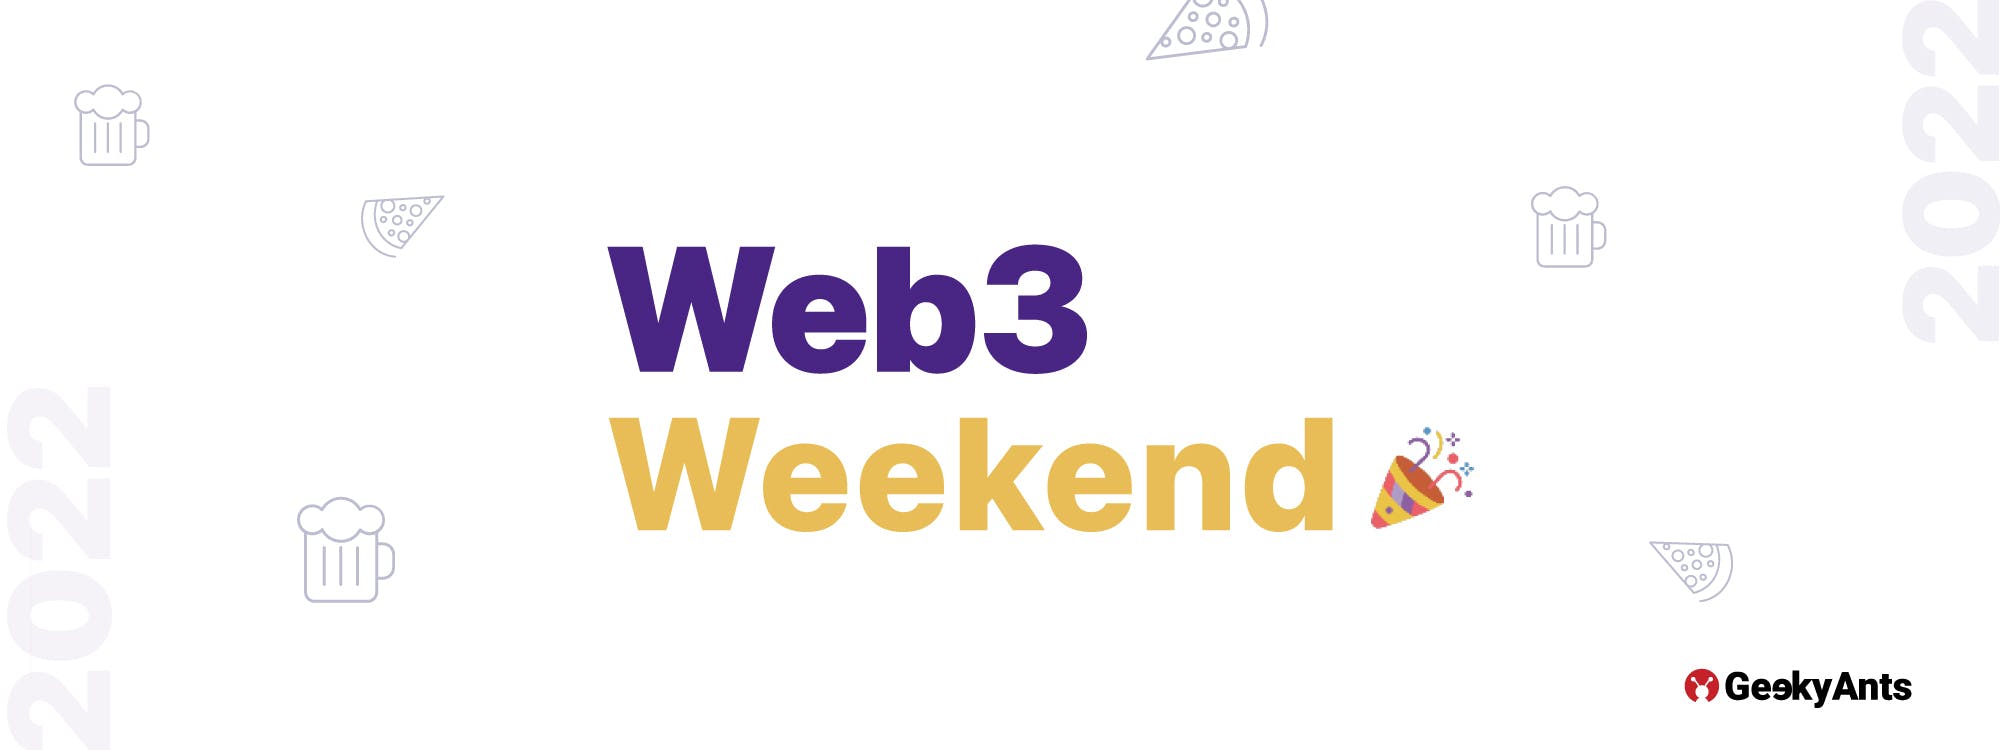 Web3 Meetup - March 2022